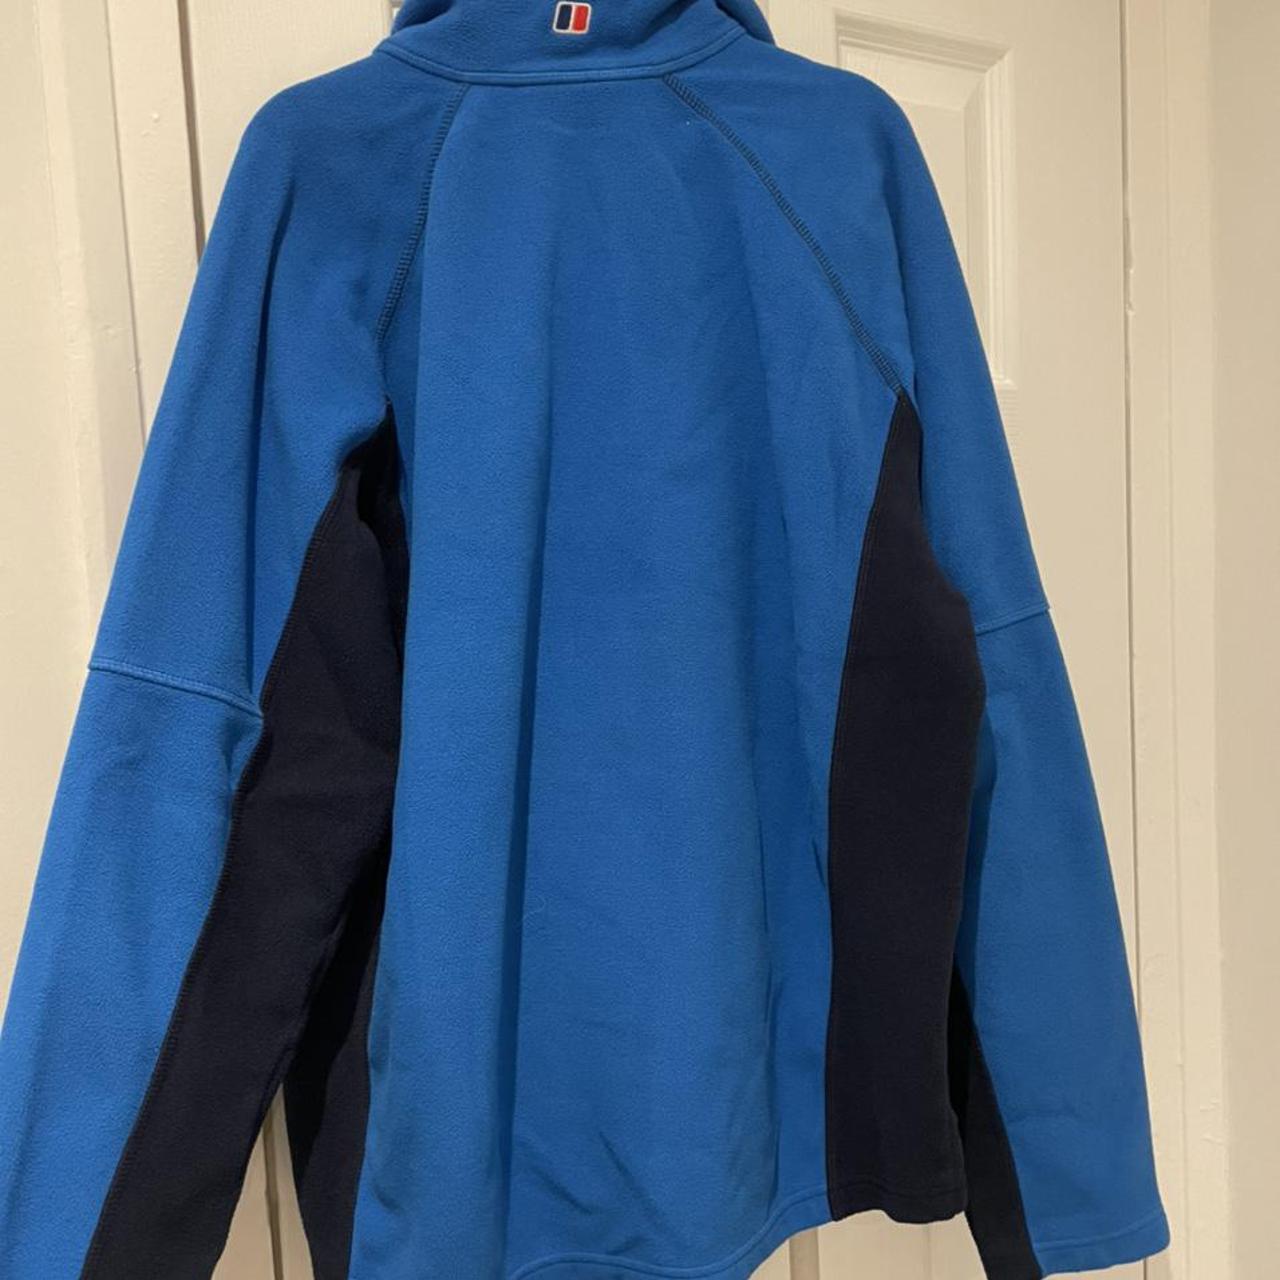 BERGHAUS quarter zip fleece in blue and black. Size... - Depop